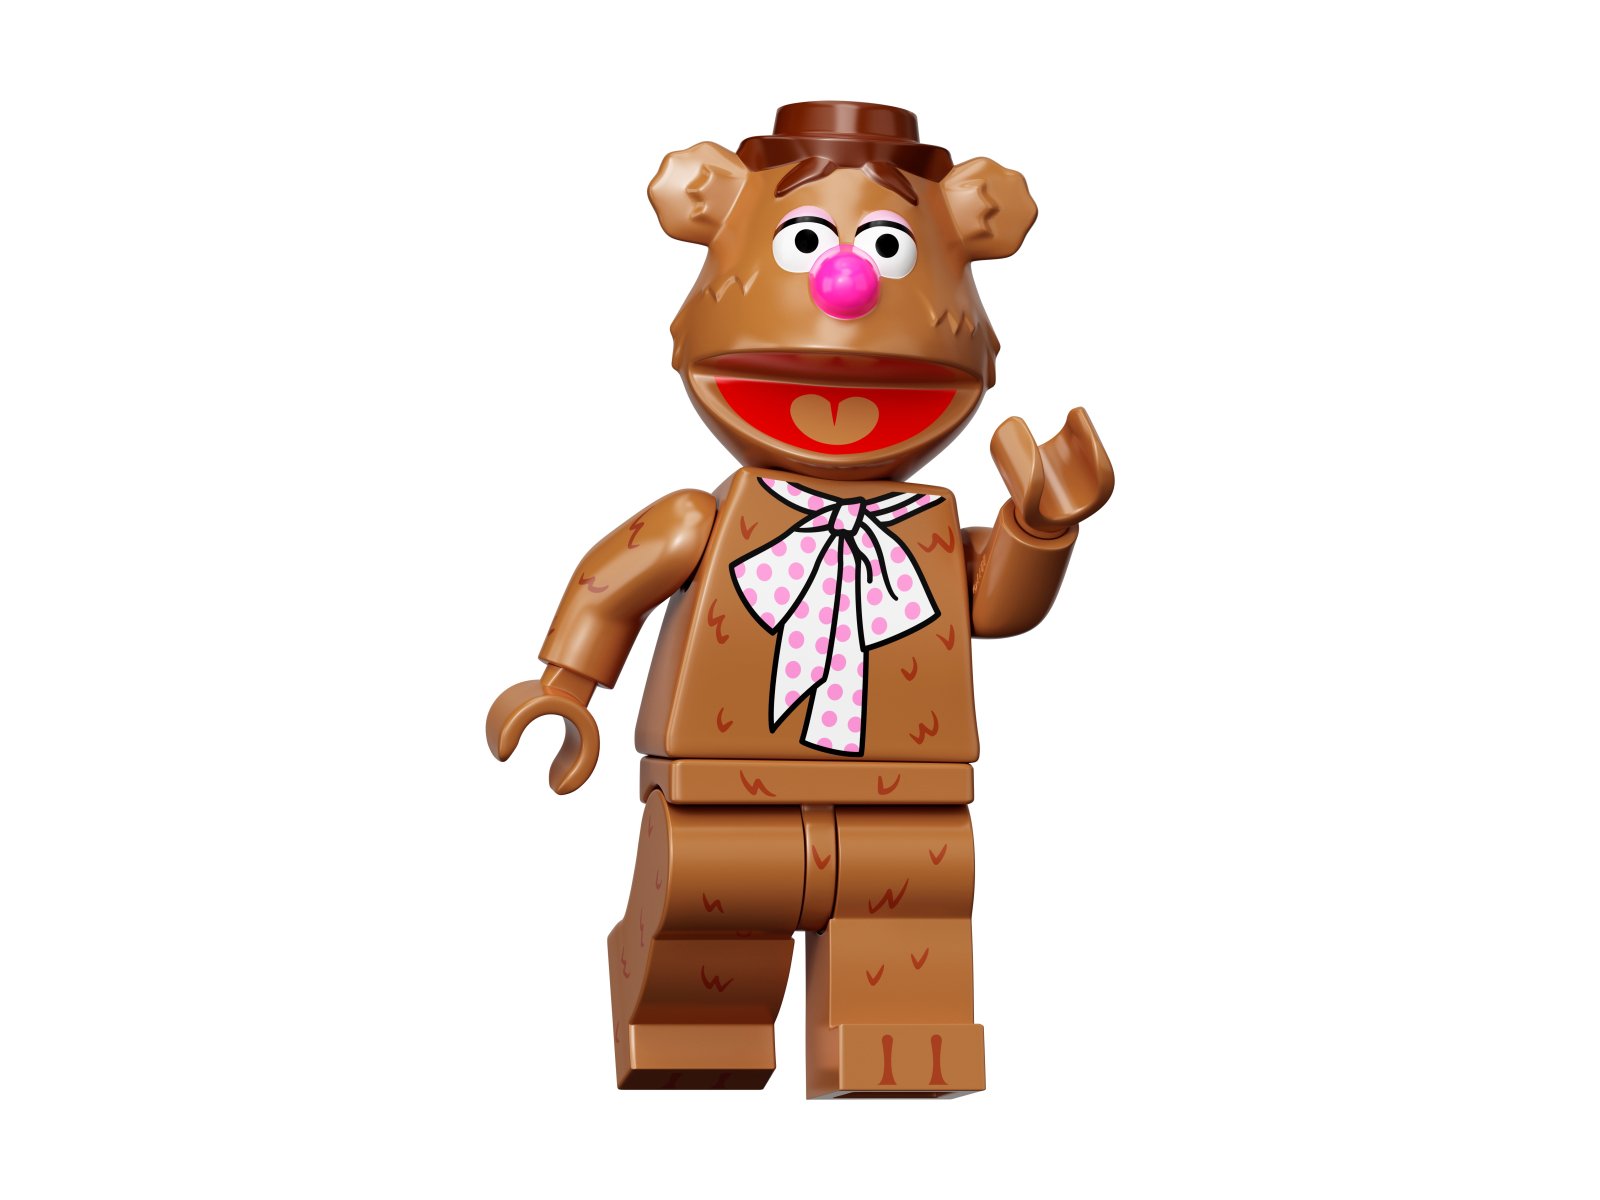 LEGO 71033 Muppety